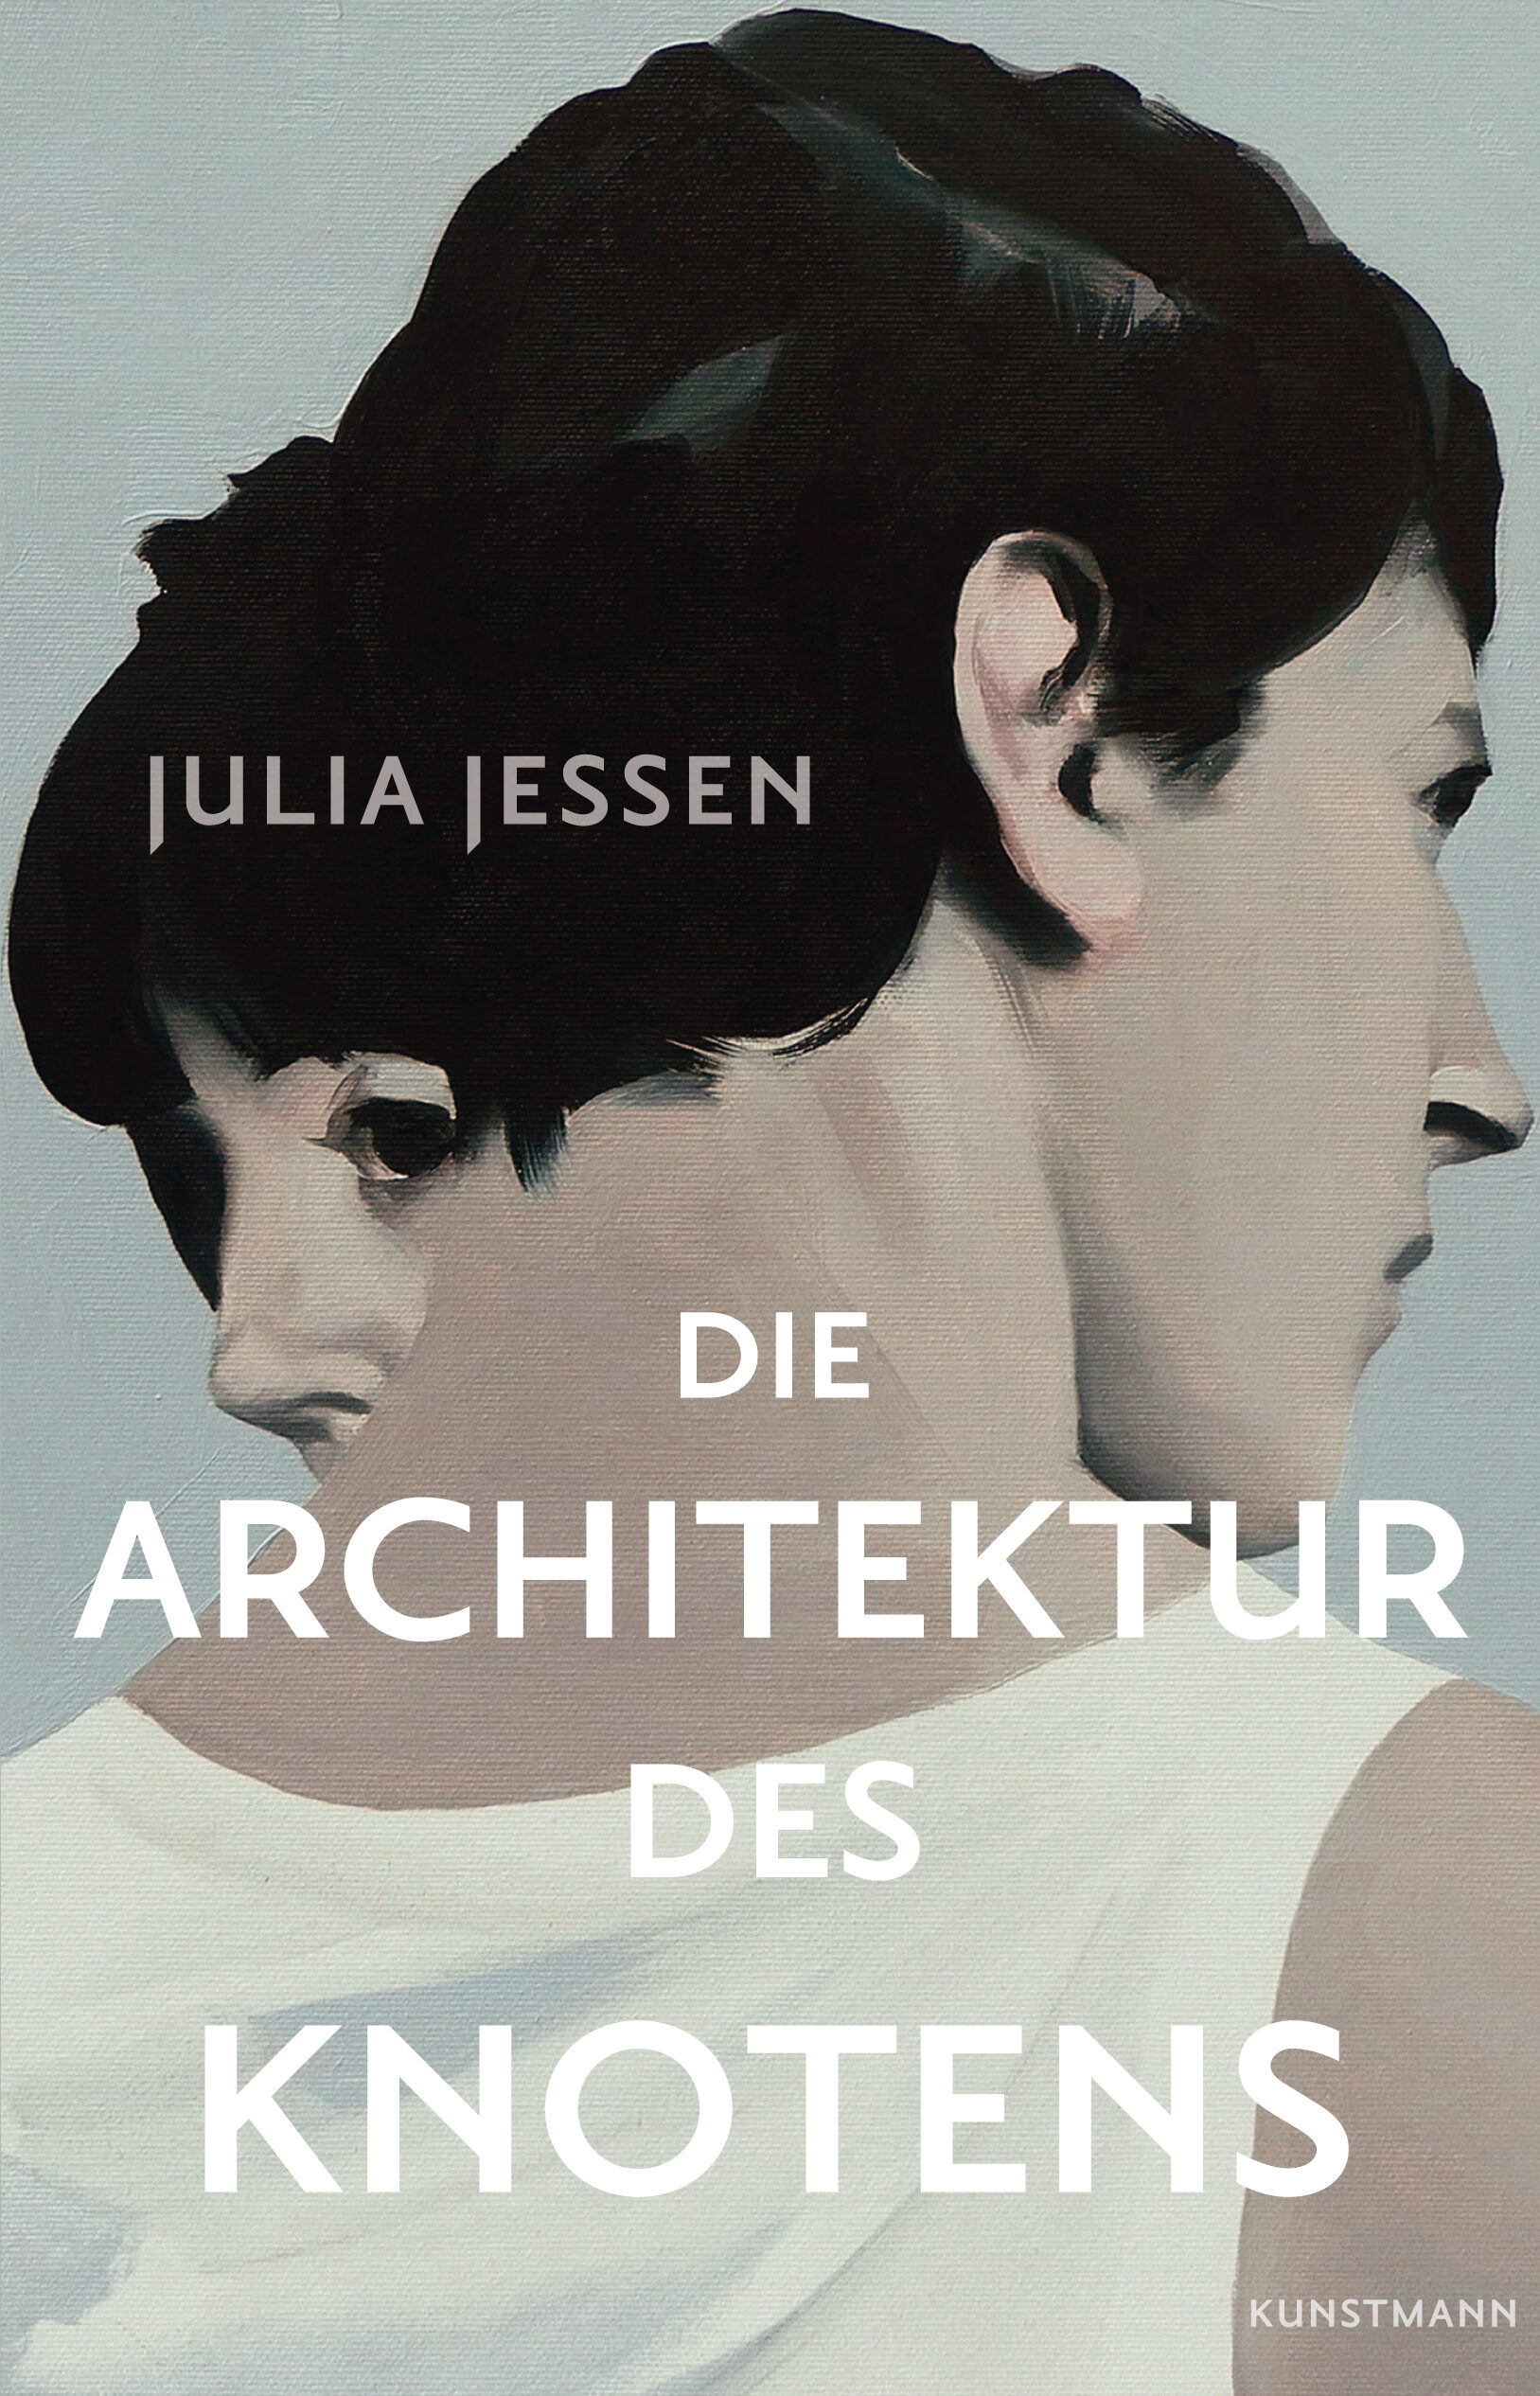 die architektur des knotens, Julia Jessen, roman, belletristik, literatur